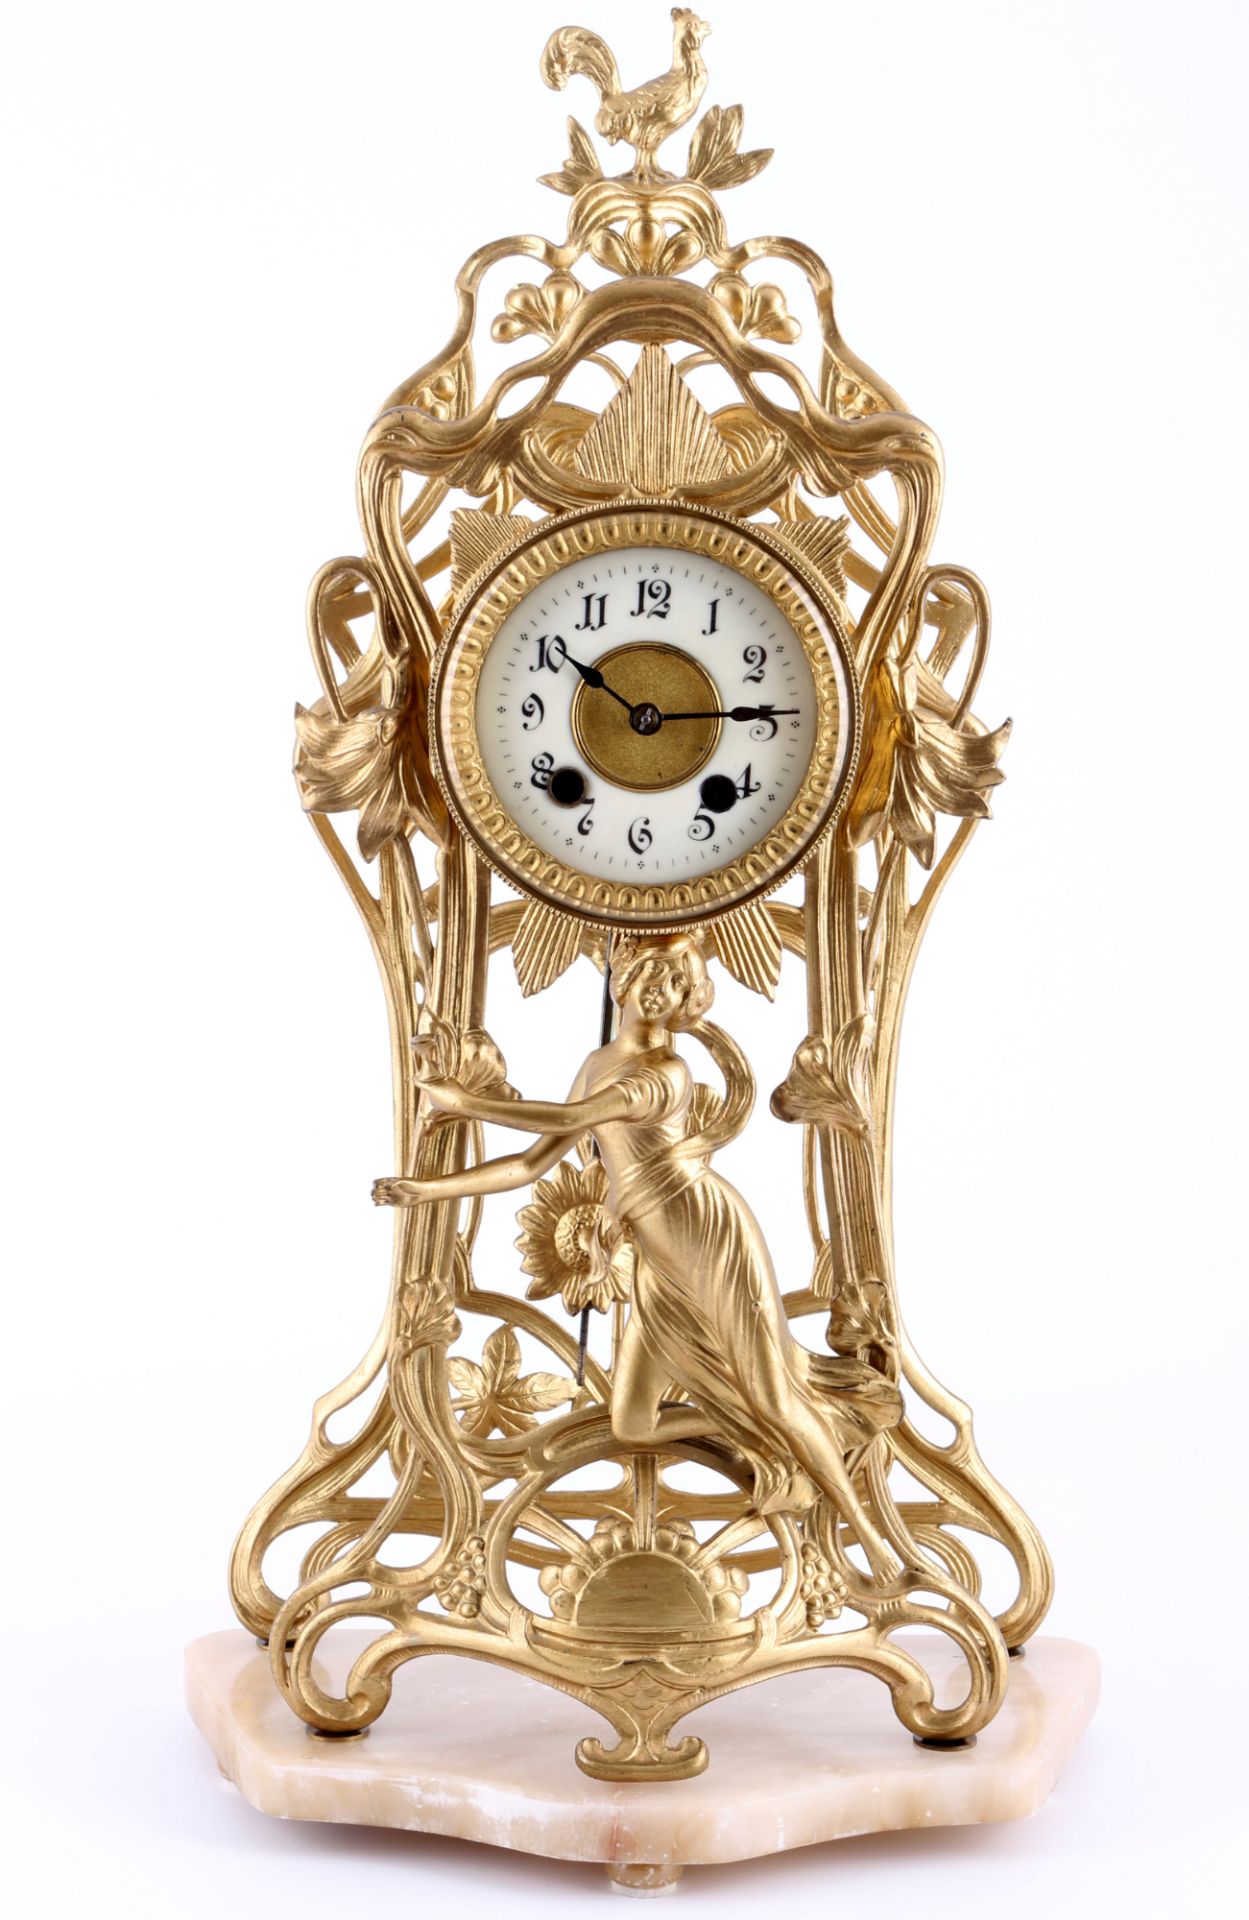 Bronze Jugendstil Kaminuhr Frankreich um 1900, french bronze mantel clock art nouveau ca. 1900,